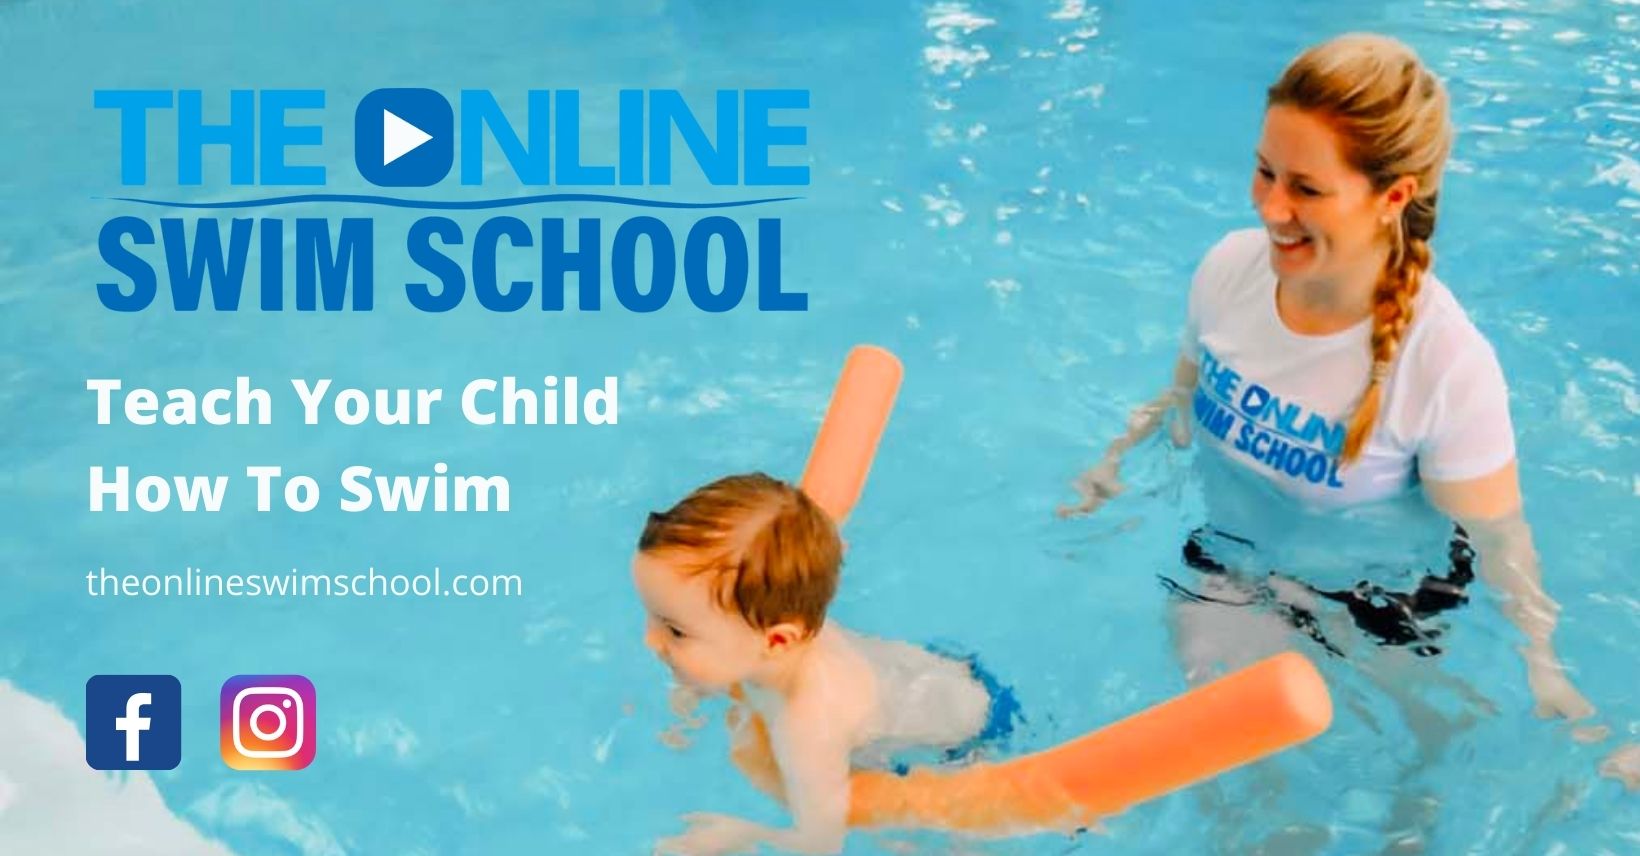 The Online Swim School Teach Your Child How to Swim